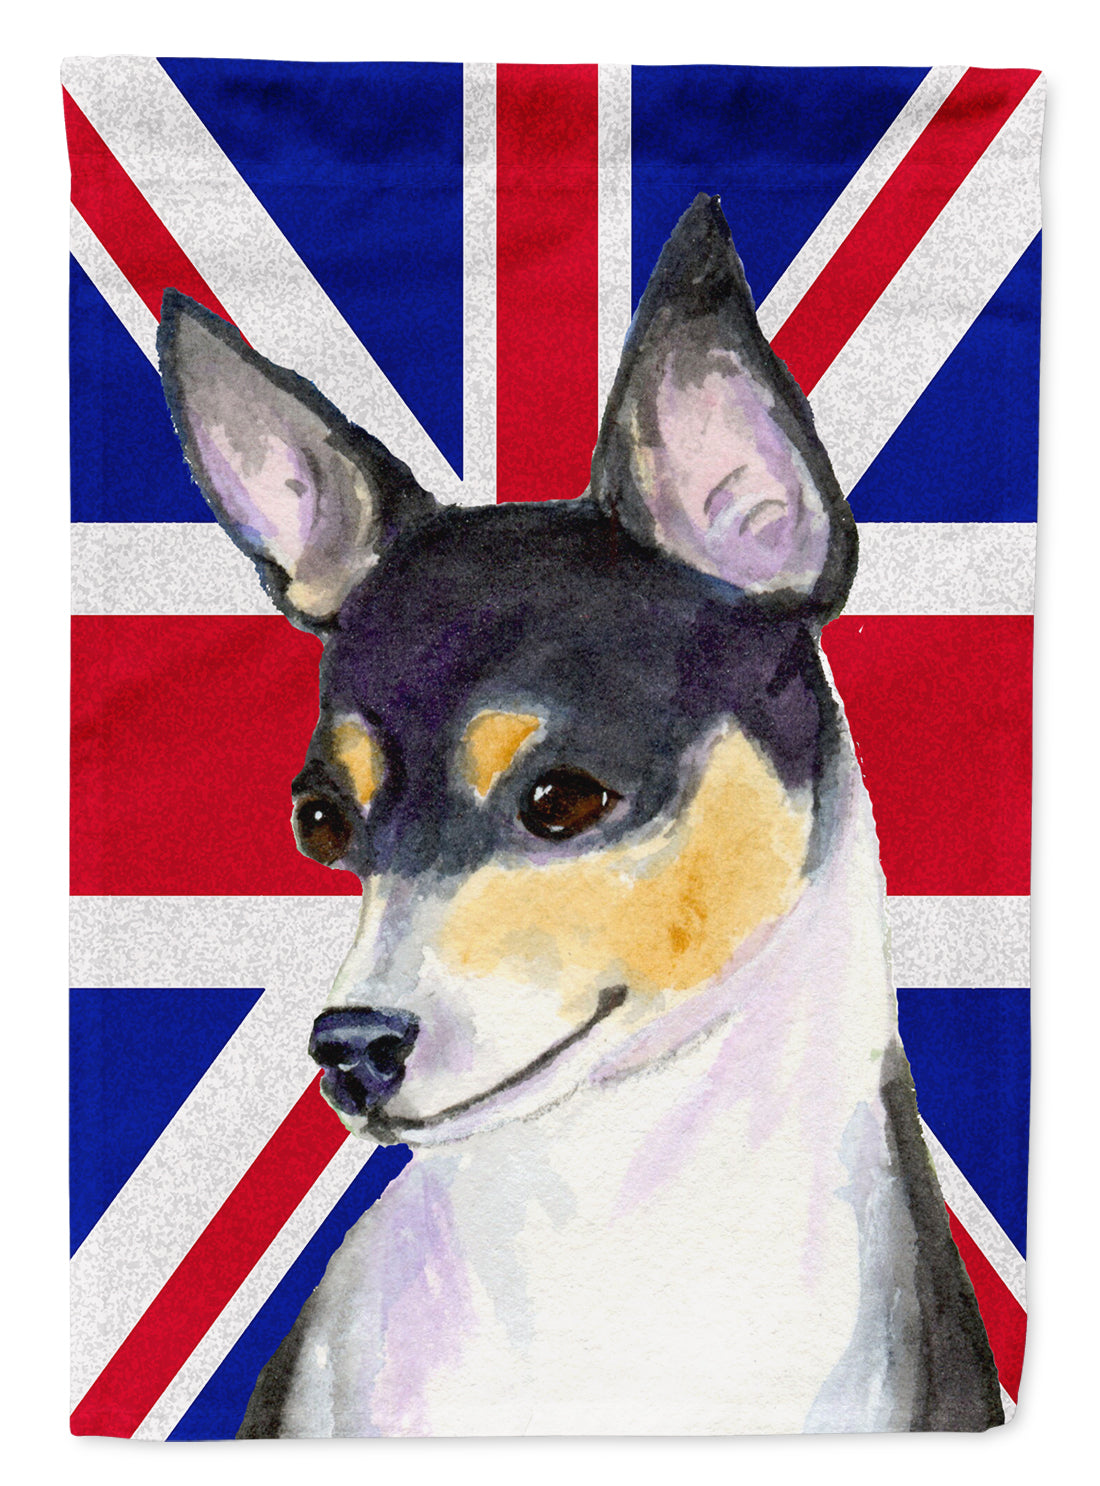 Rat Terrier with English Union Jack British Flag Flag Garden Size SS4960GF